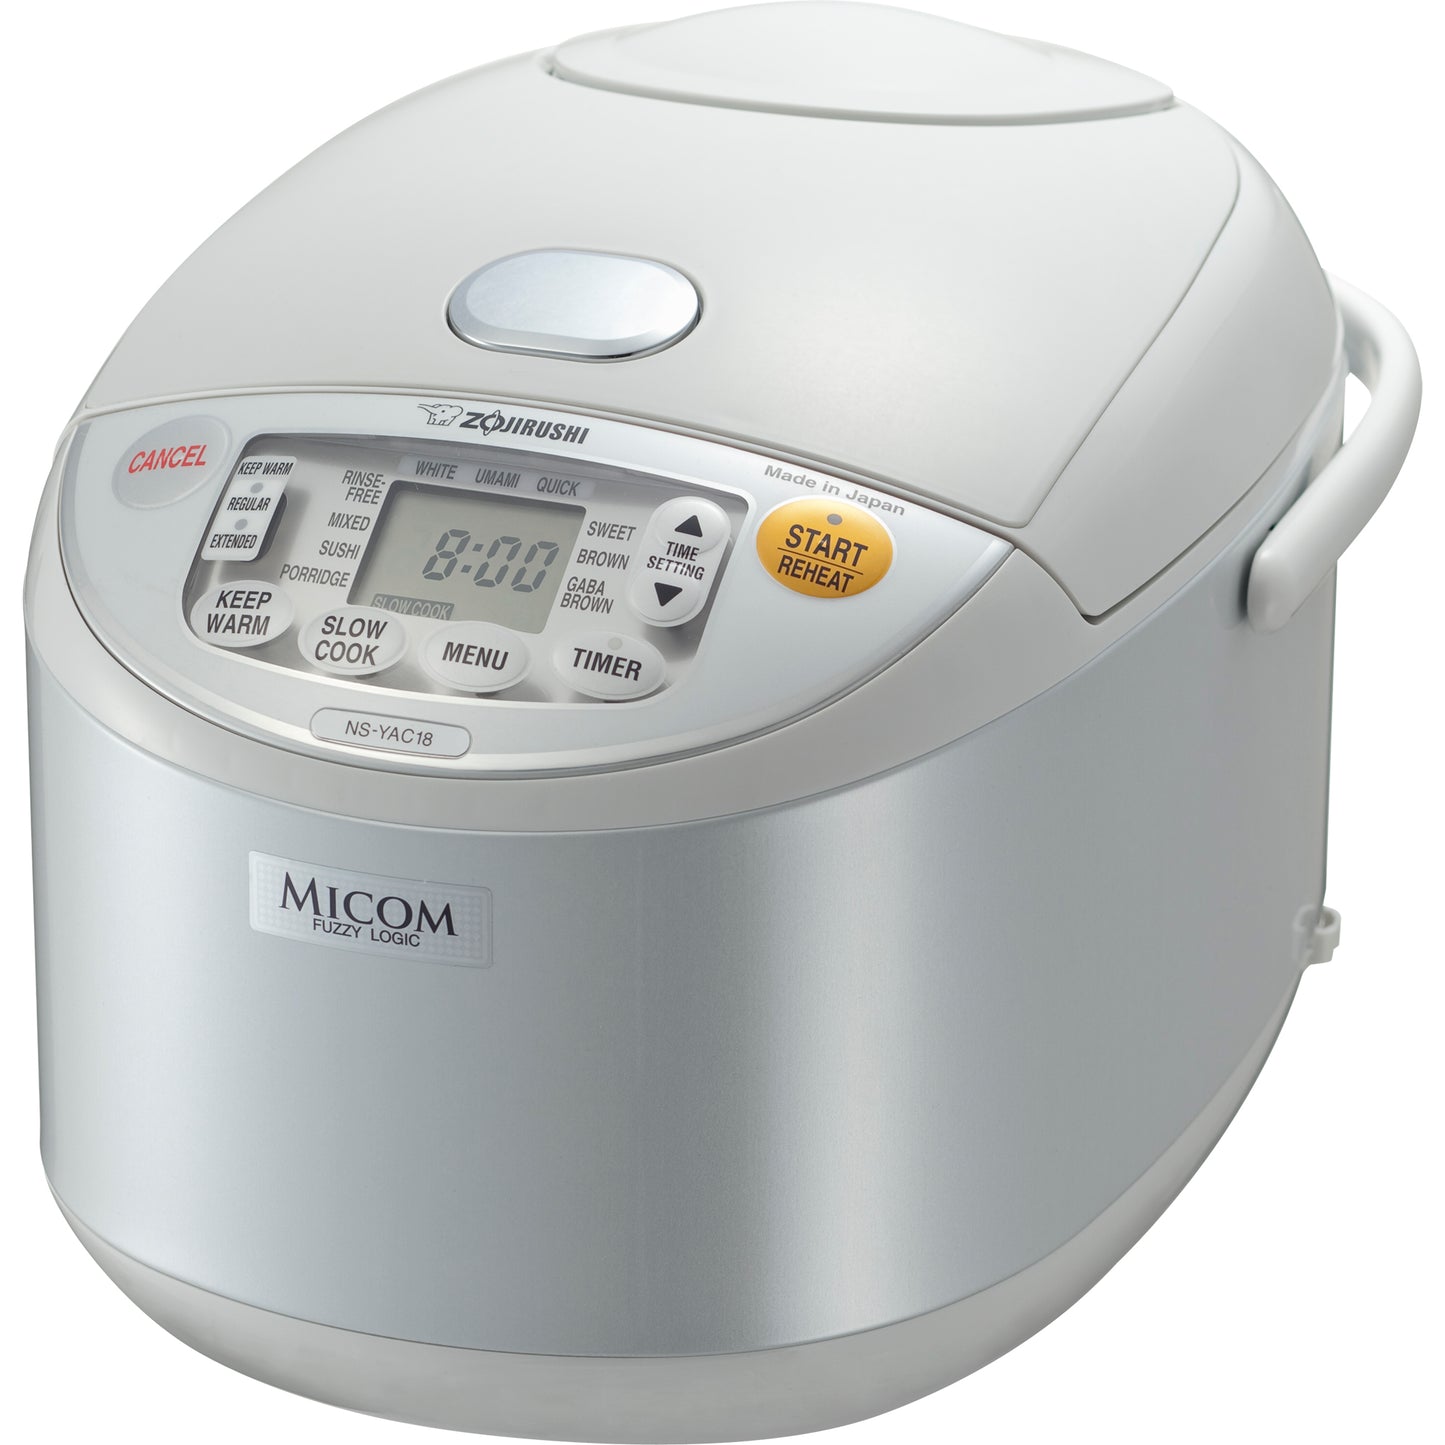 Umami® Micom Rice Cooker & Warmer NS-YAC10/18